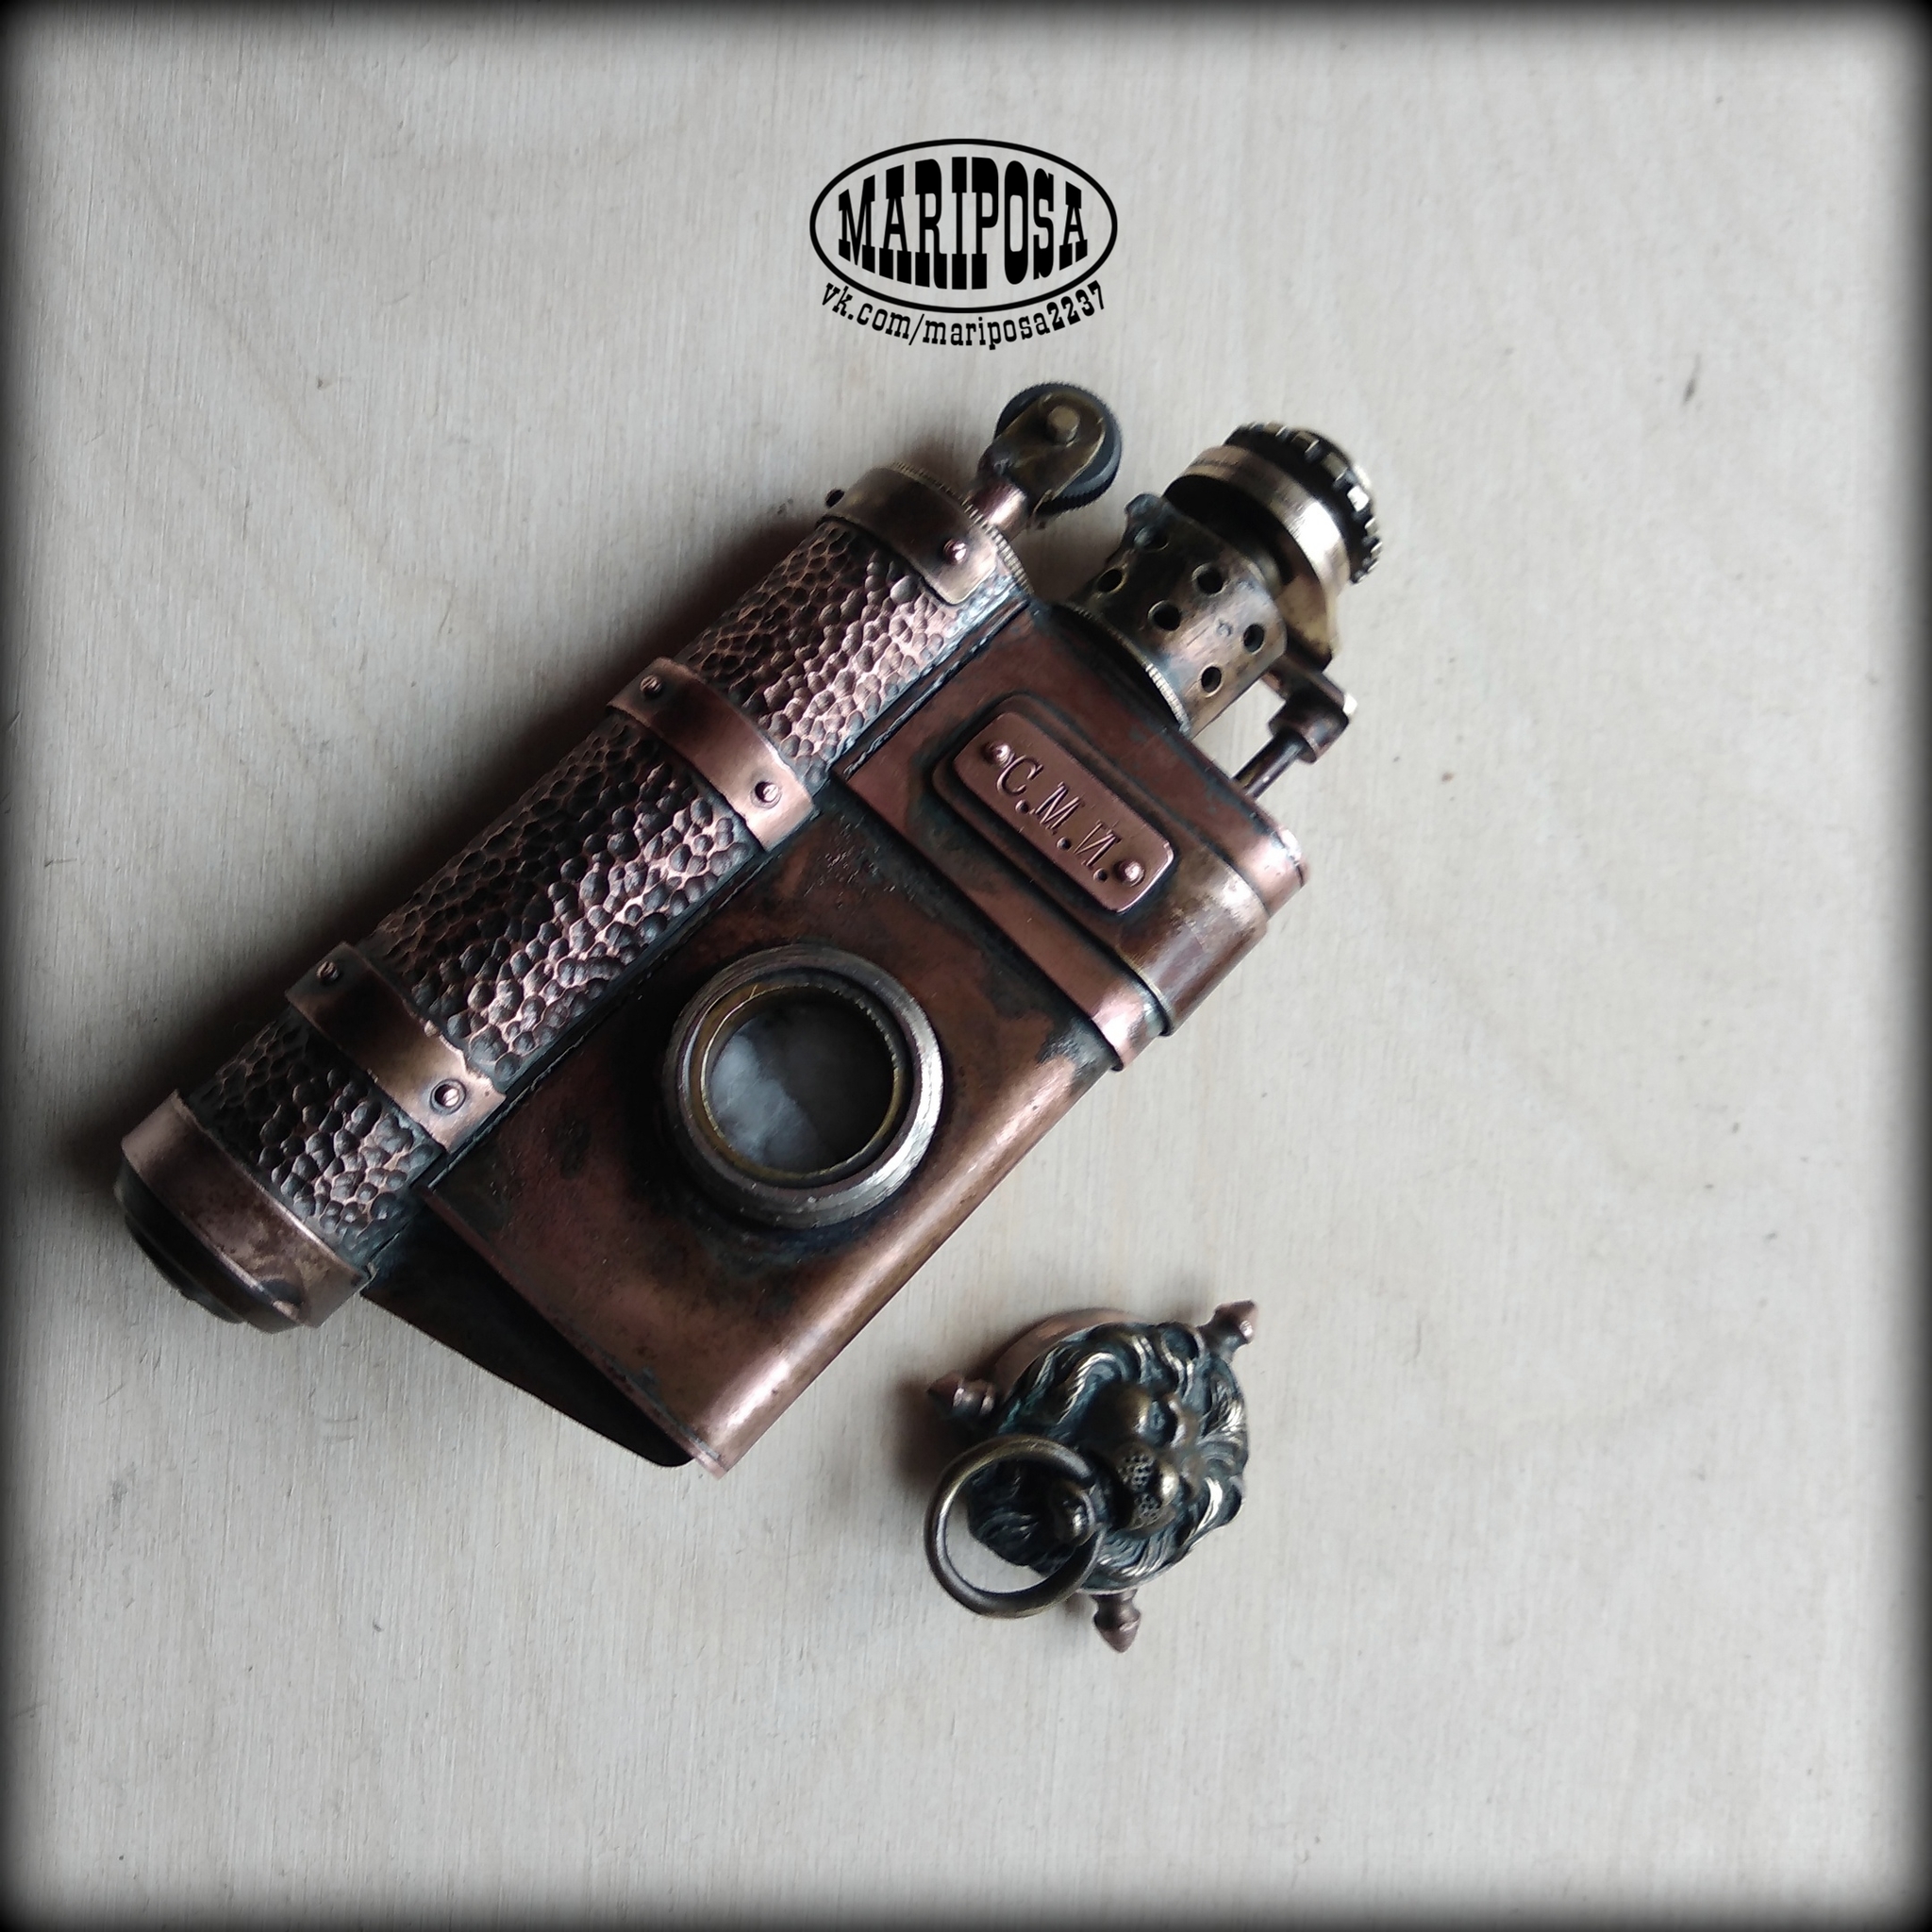 Lighter Feuerlwe - My, Lighter, Steampunk lighter, , , Needlework without process, Longpost